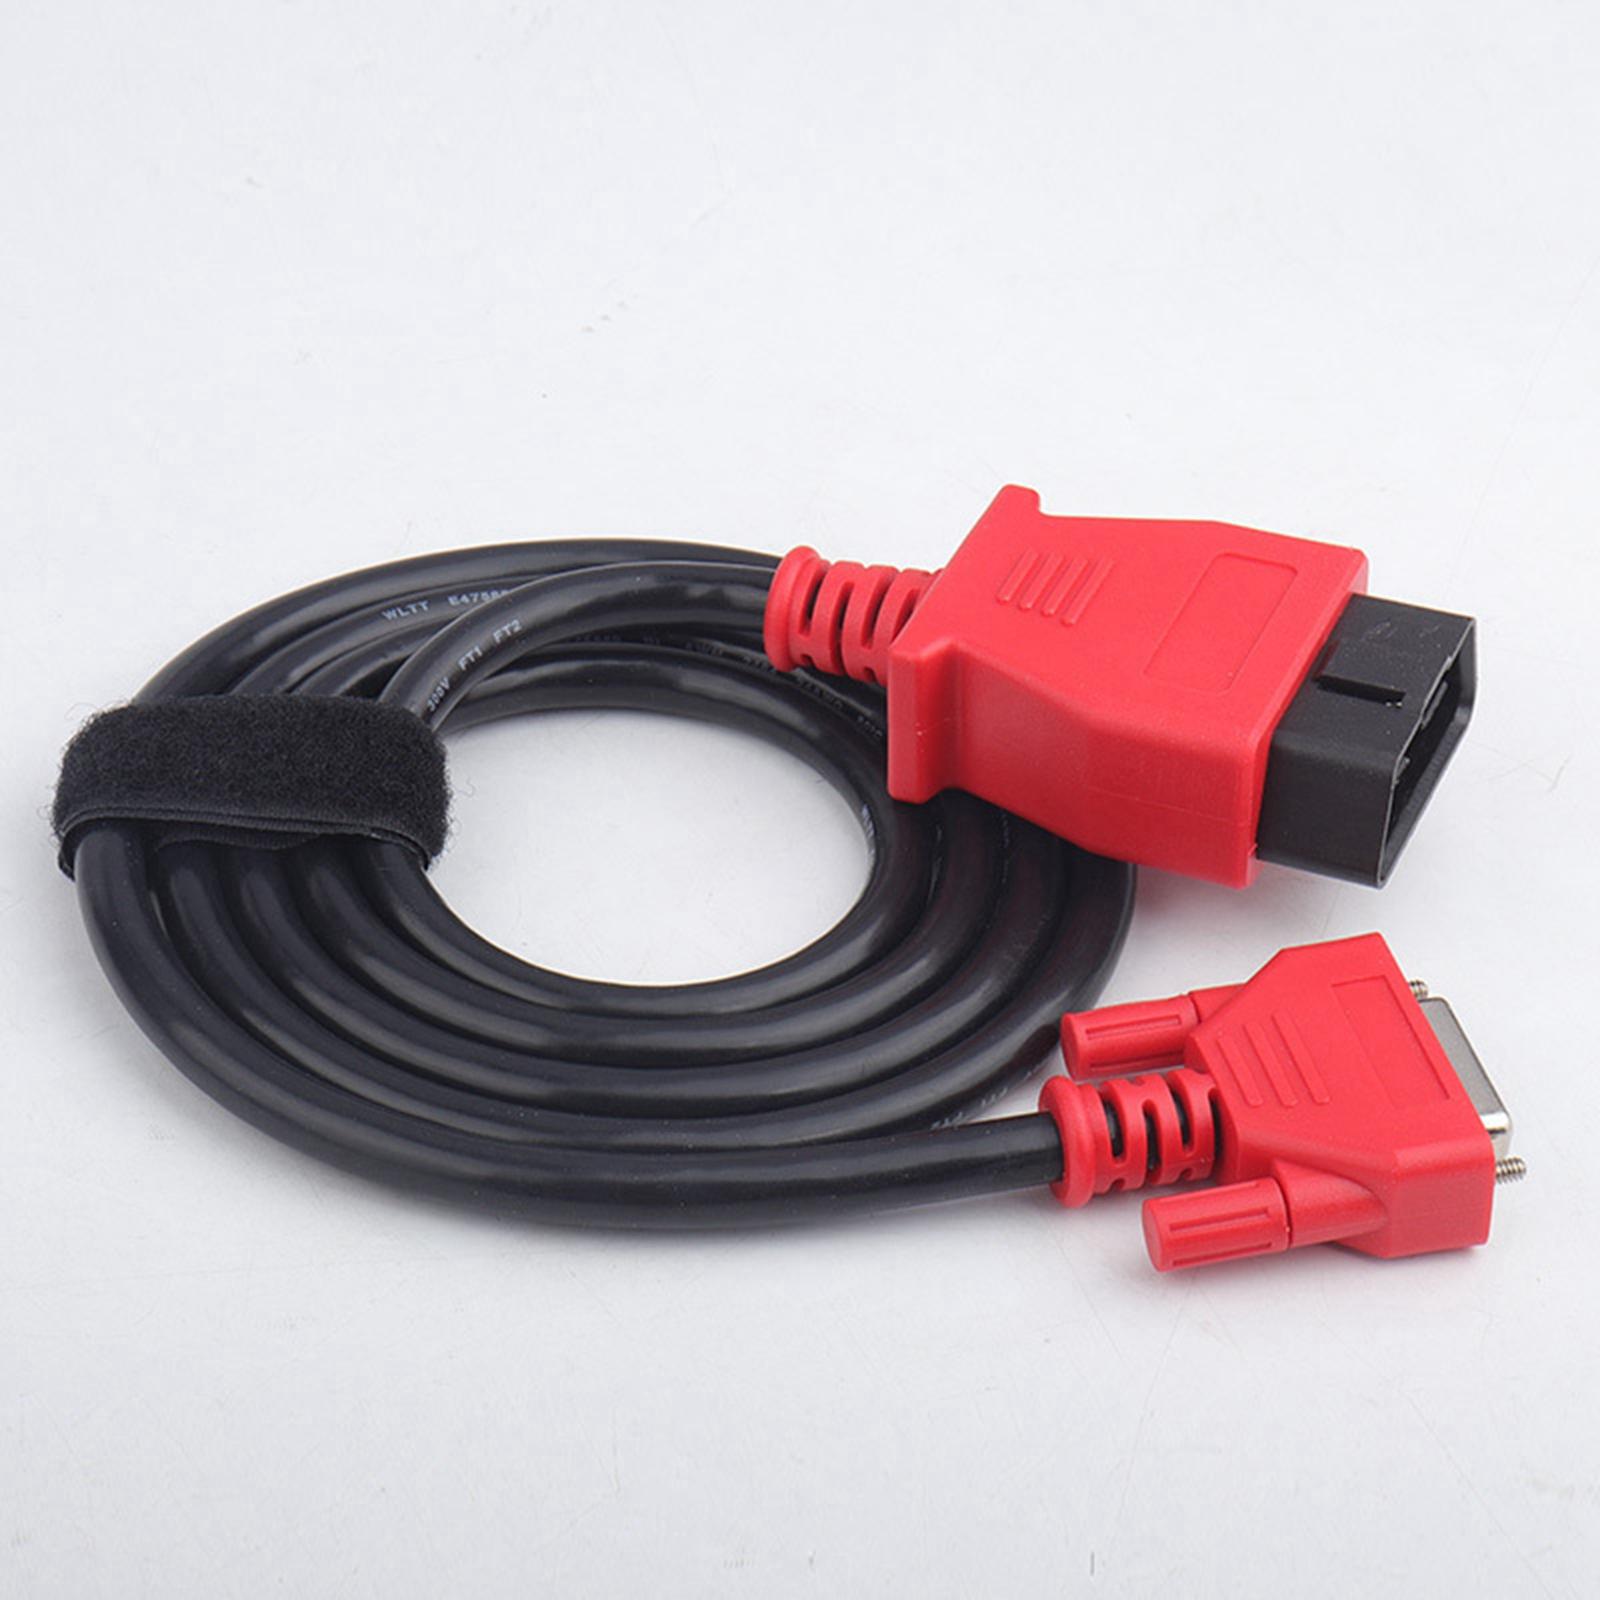 Car Main Test Data Cable Diagnostic OBD2 Cord for Autel MS906 MS905 MS908Pro